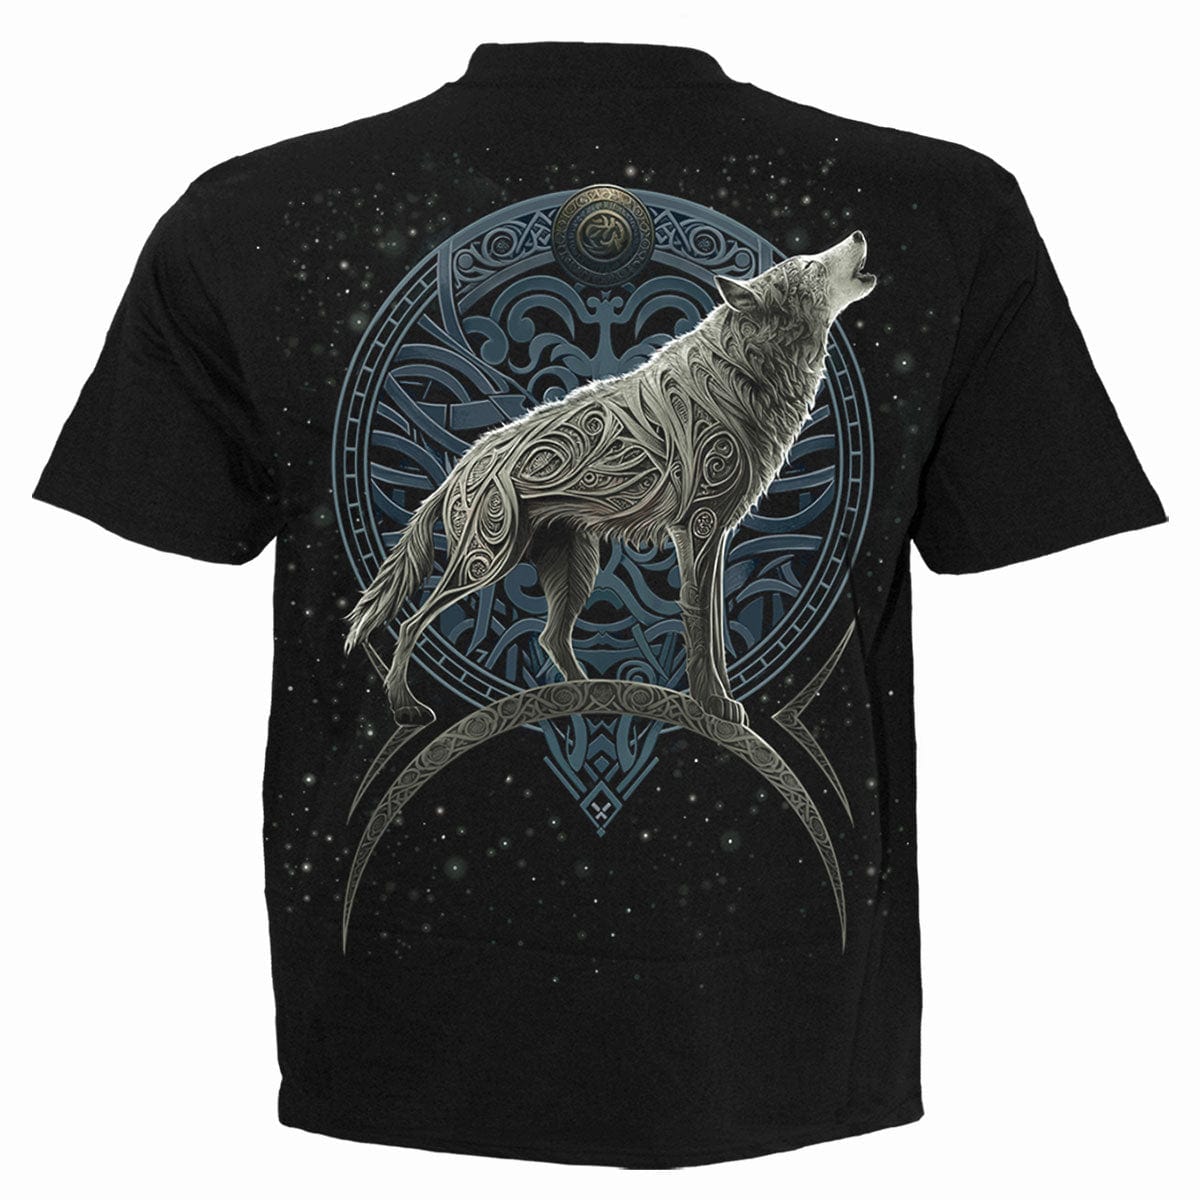 CELTIC WOLF - T-Shirt Black - Spiral USA